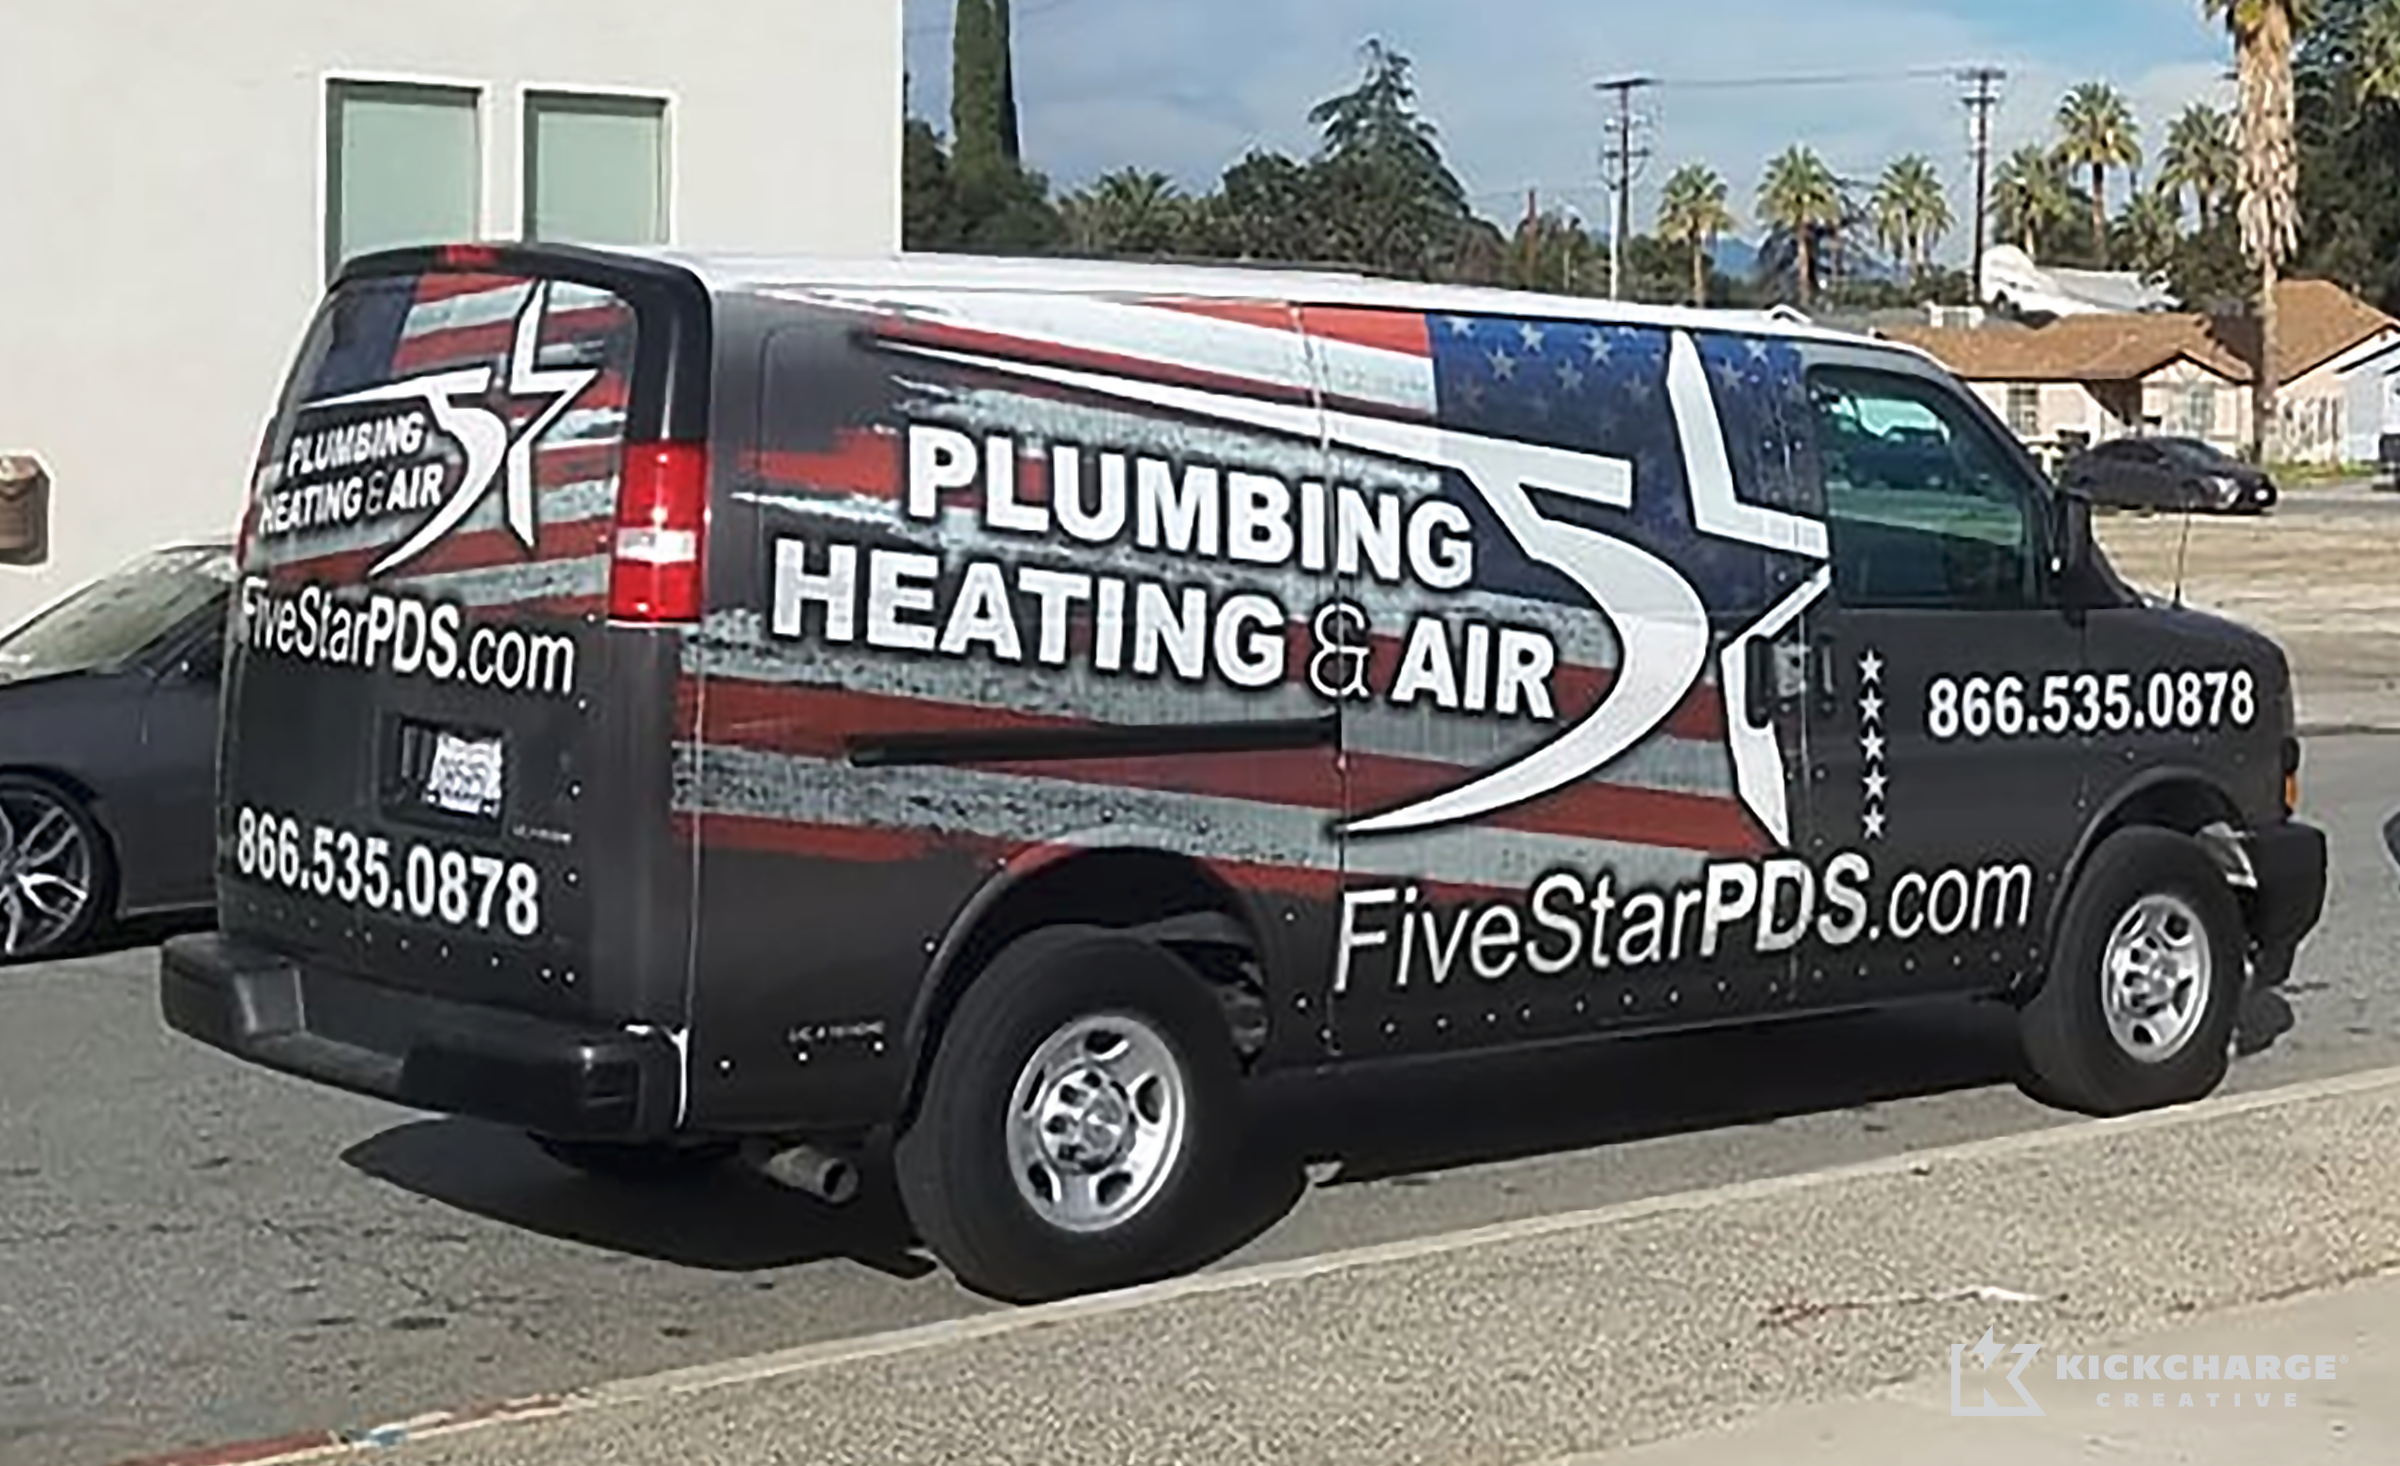 5 Star Plumbing, Heating & Air